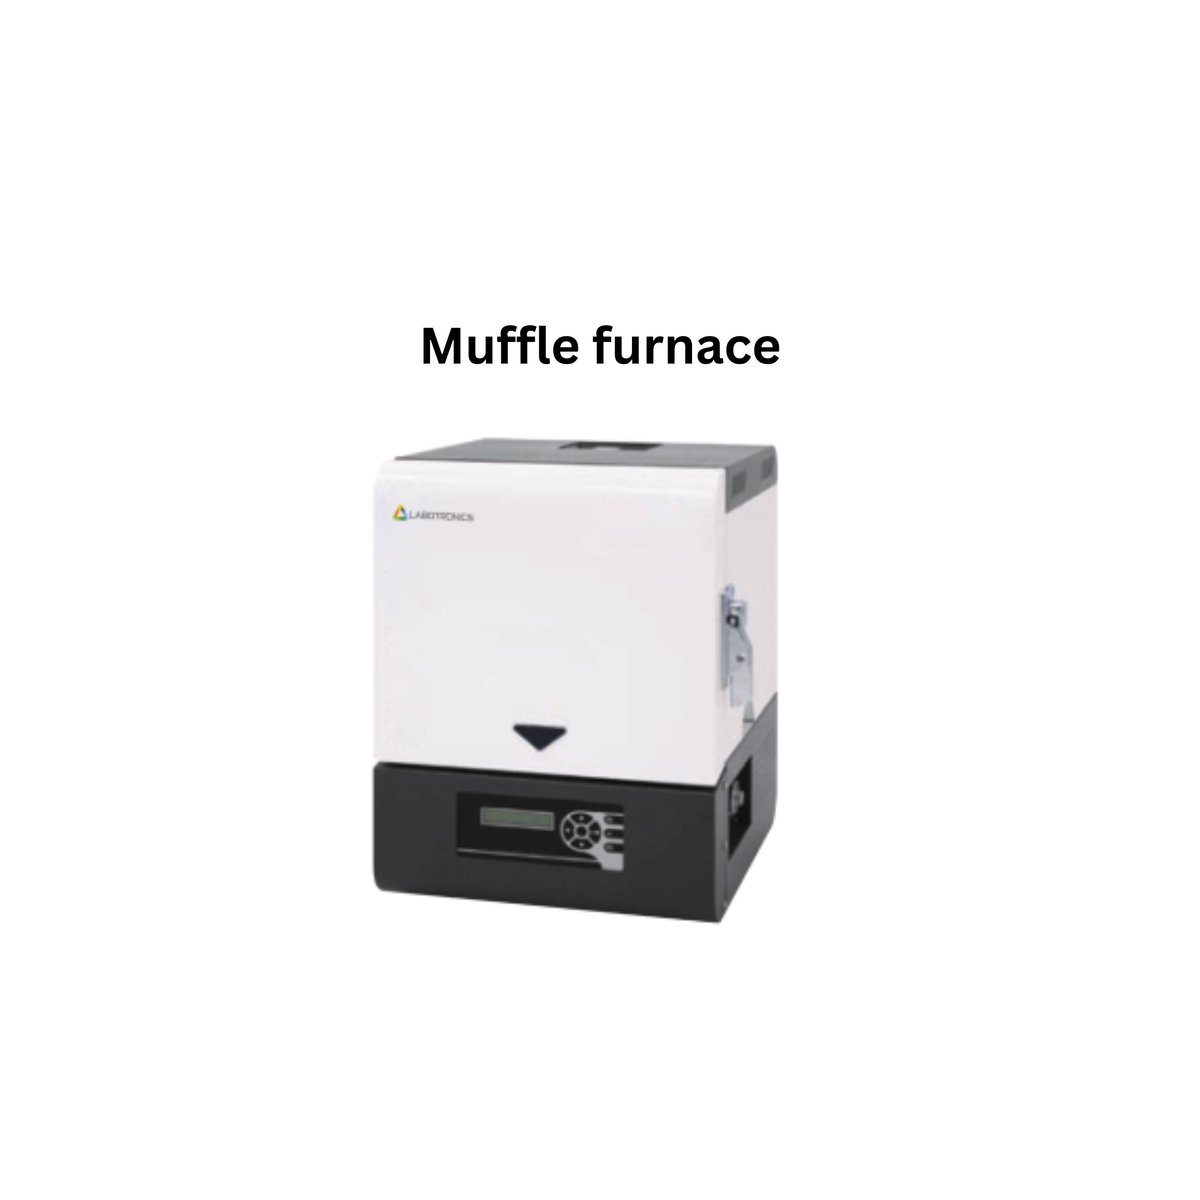 Muffle furnace.jpg